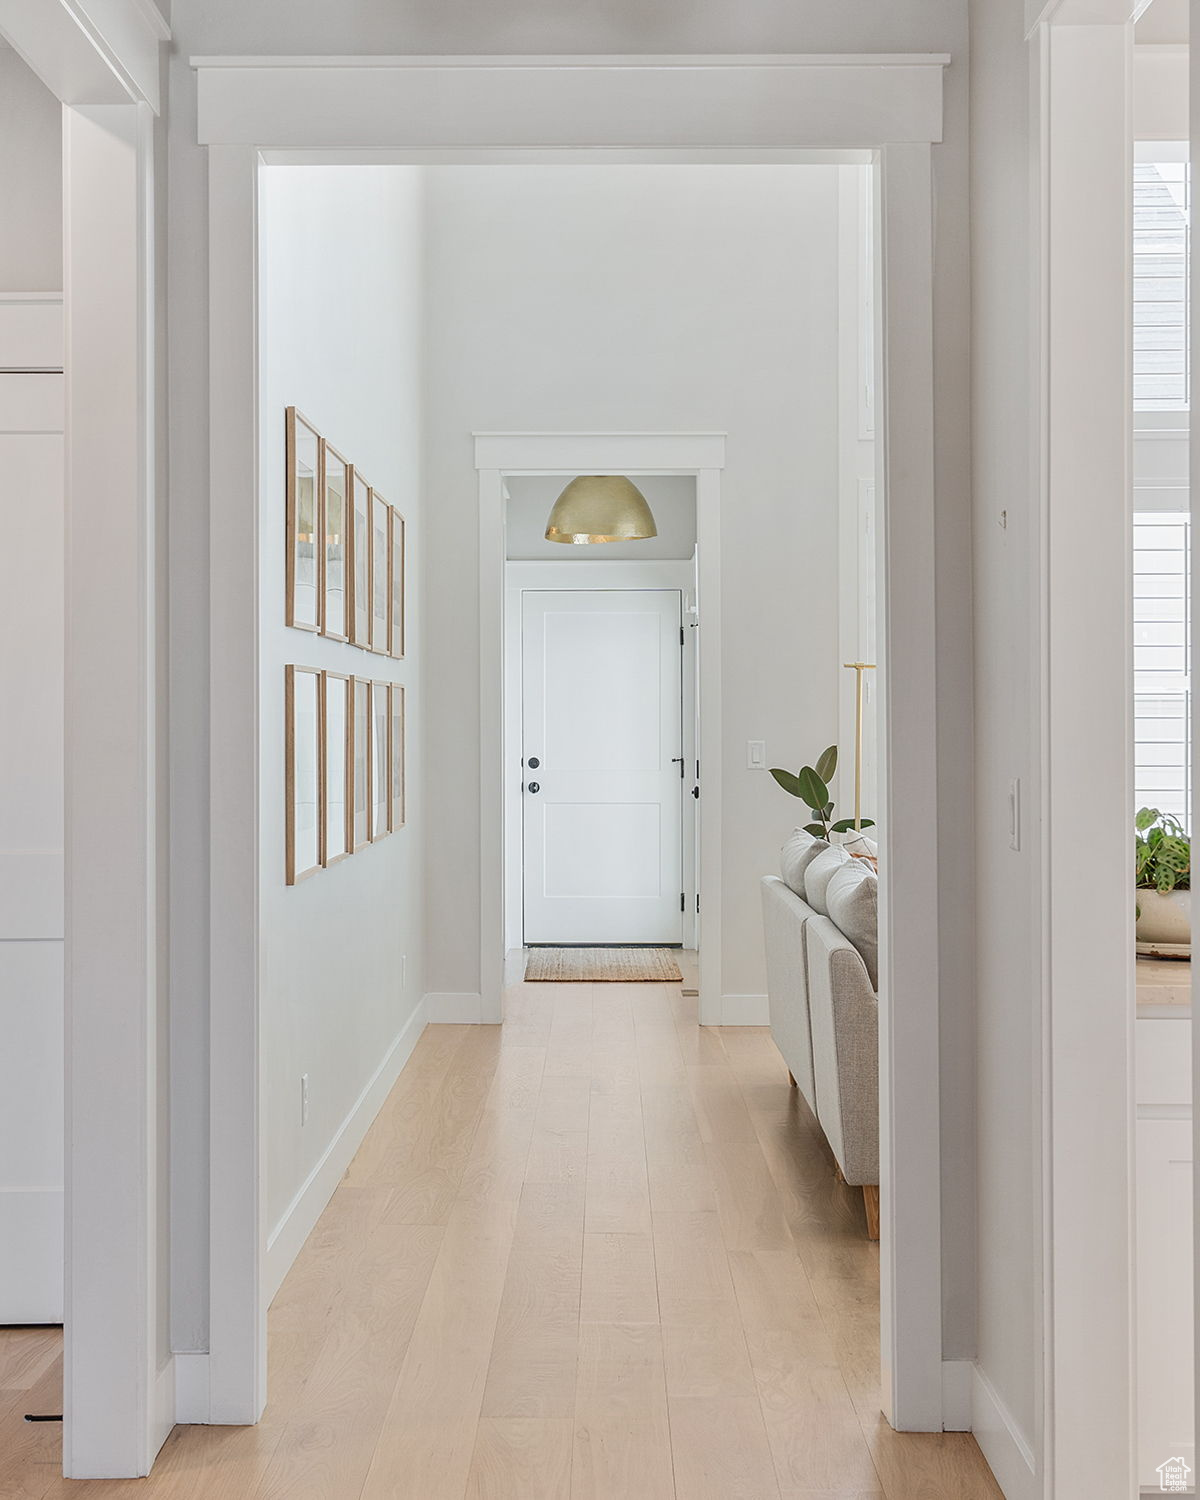 Hallway featuring plenty of natural light, and white oak hardwood floors.